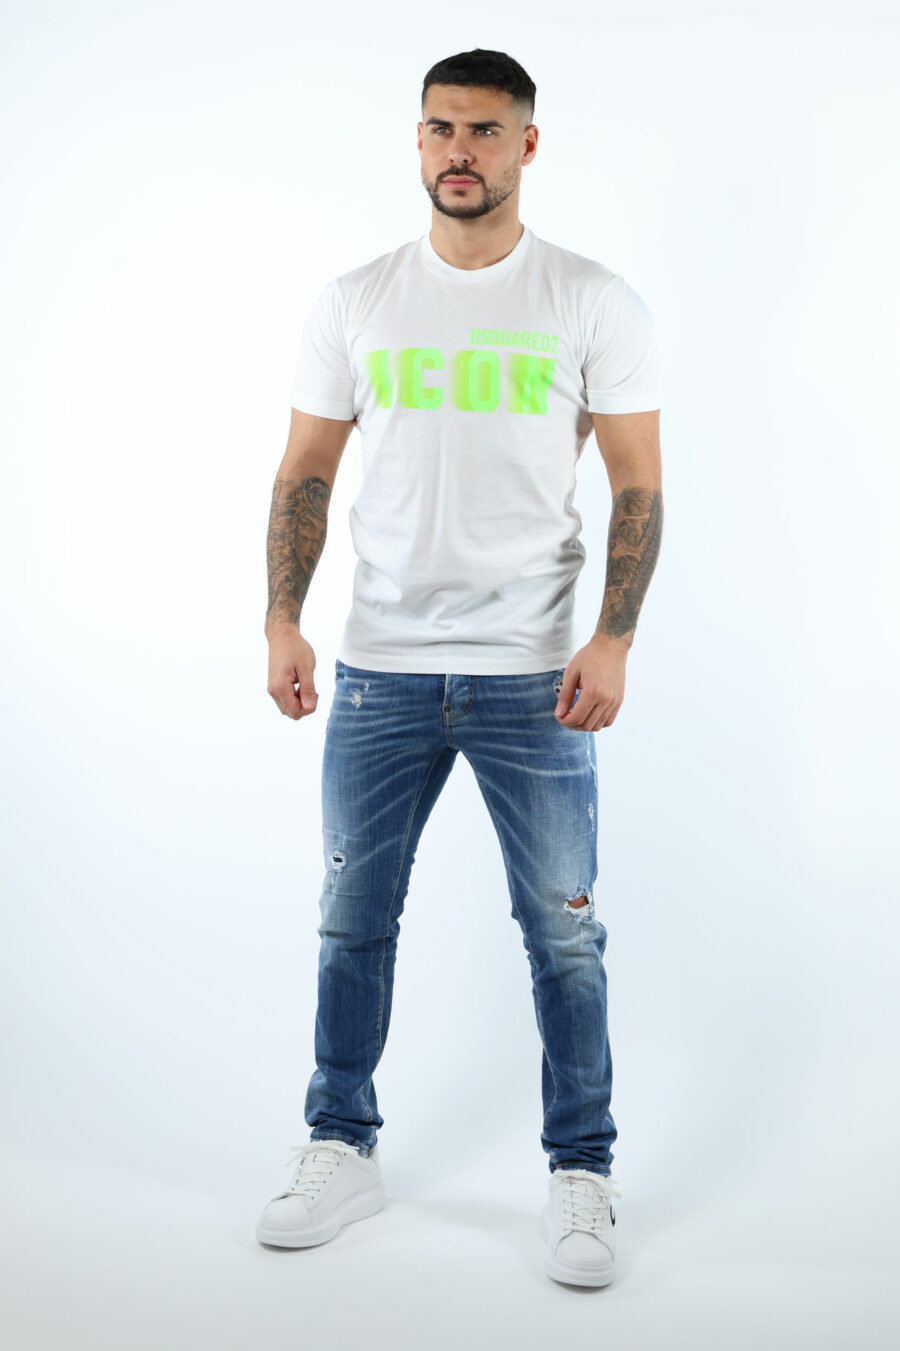 Camiseta blanca con maxilogo "icon" verde neon borroso - 106631